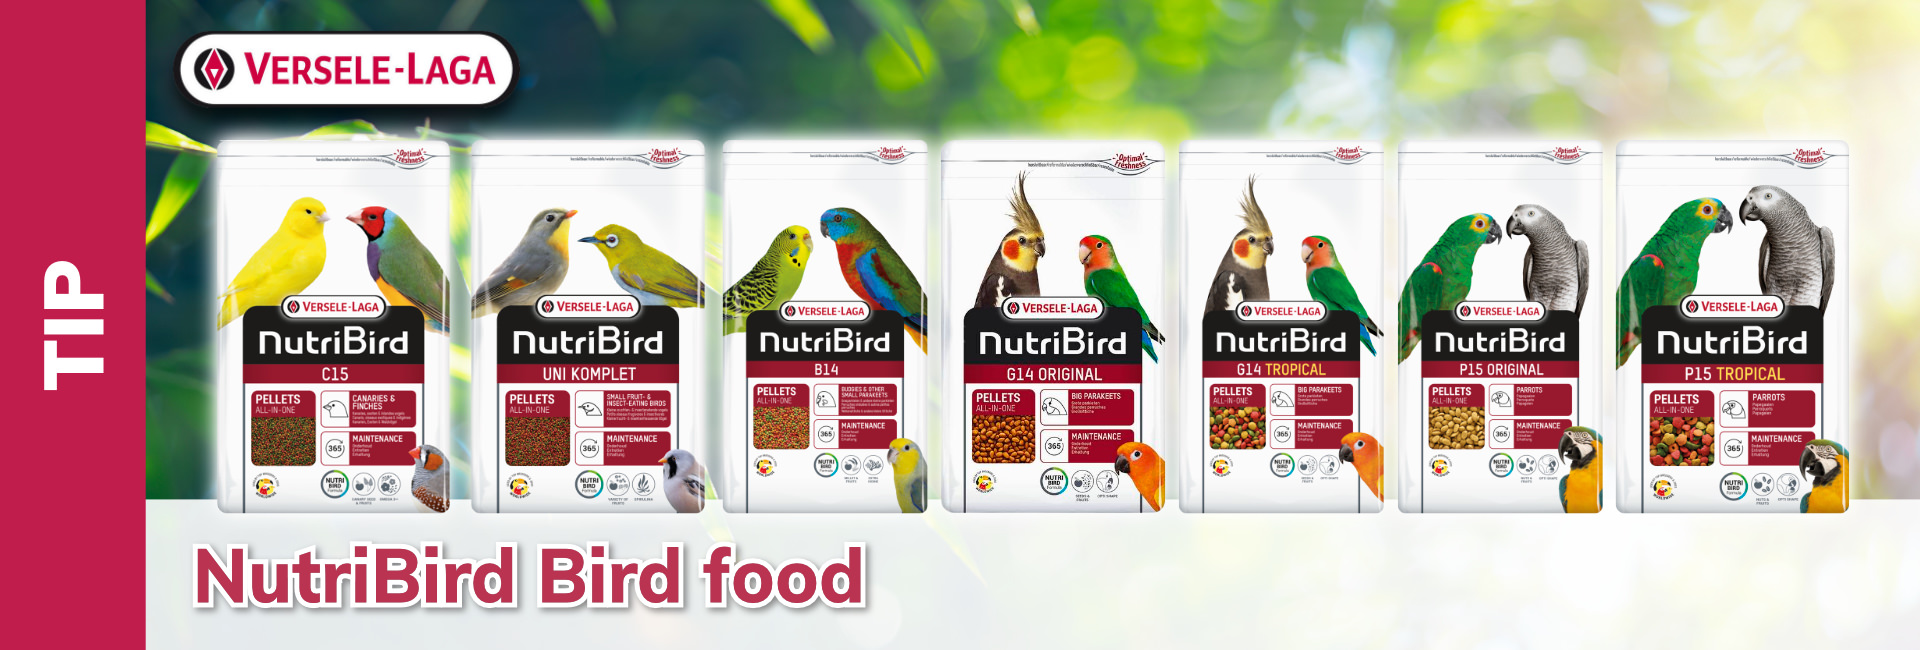 Versele-Laga NutriBird Bird food